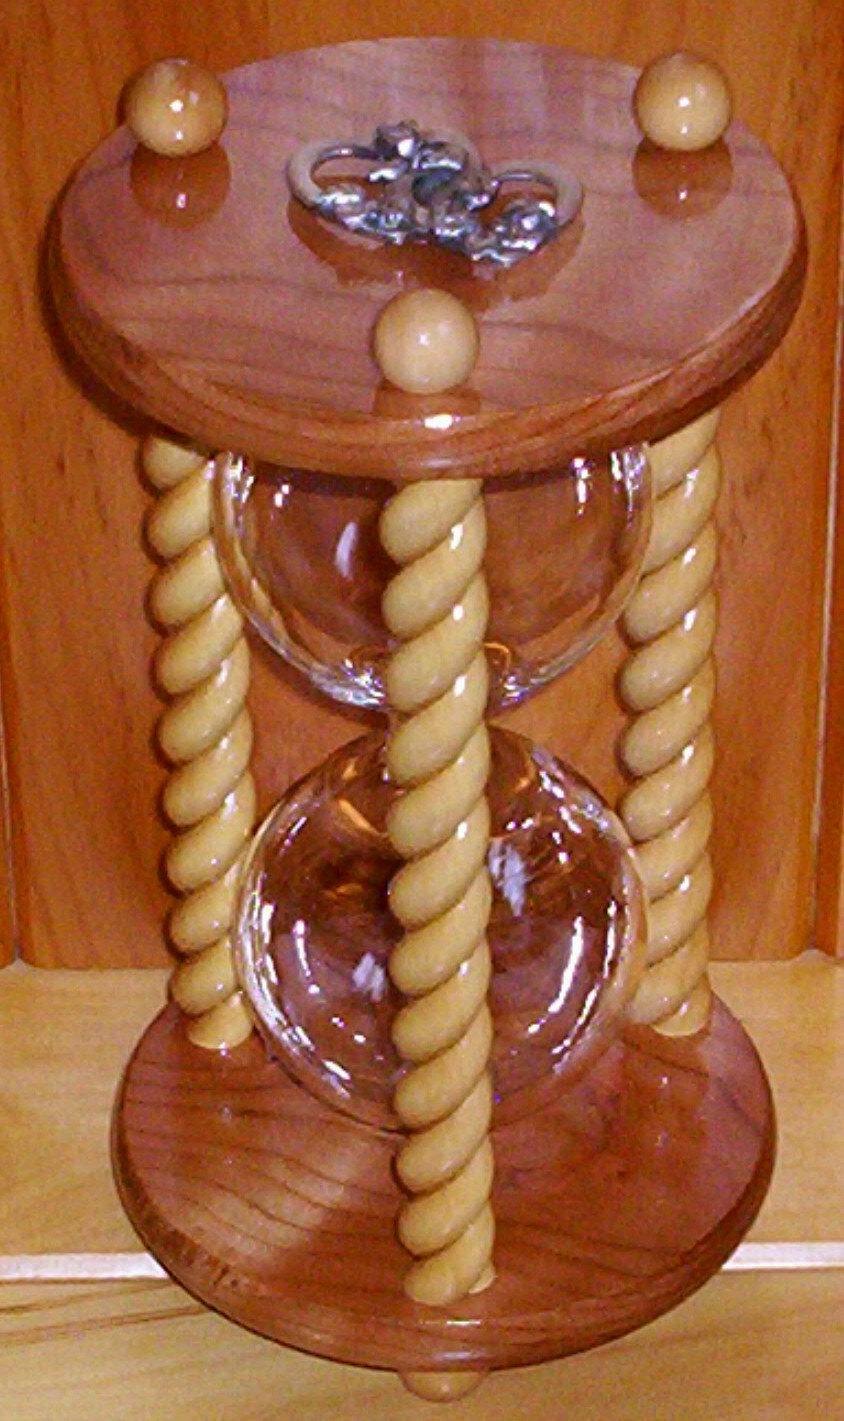 Mariage - Unity Hourglass - The Honeymoon Cherry and Maple Wedding Unity Sand Ceremony Hourglass by Heirloom Hourglass - The Original Unity Hourglass